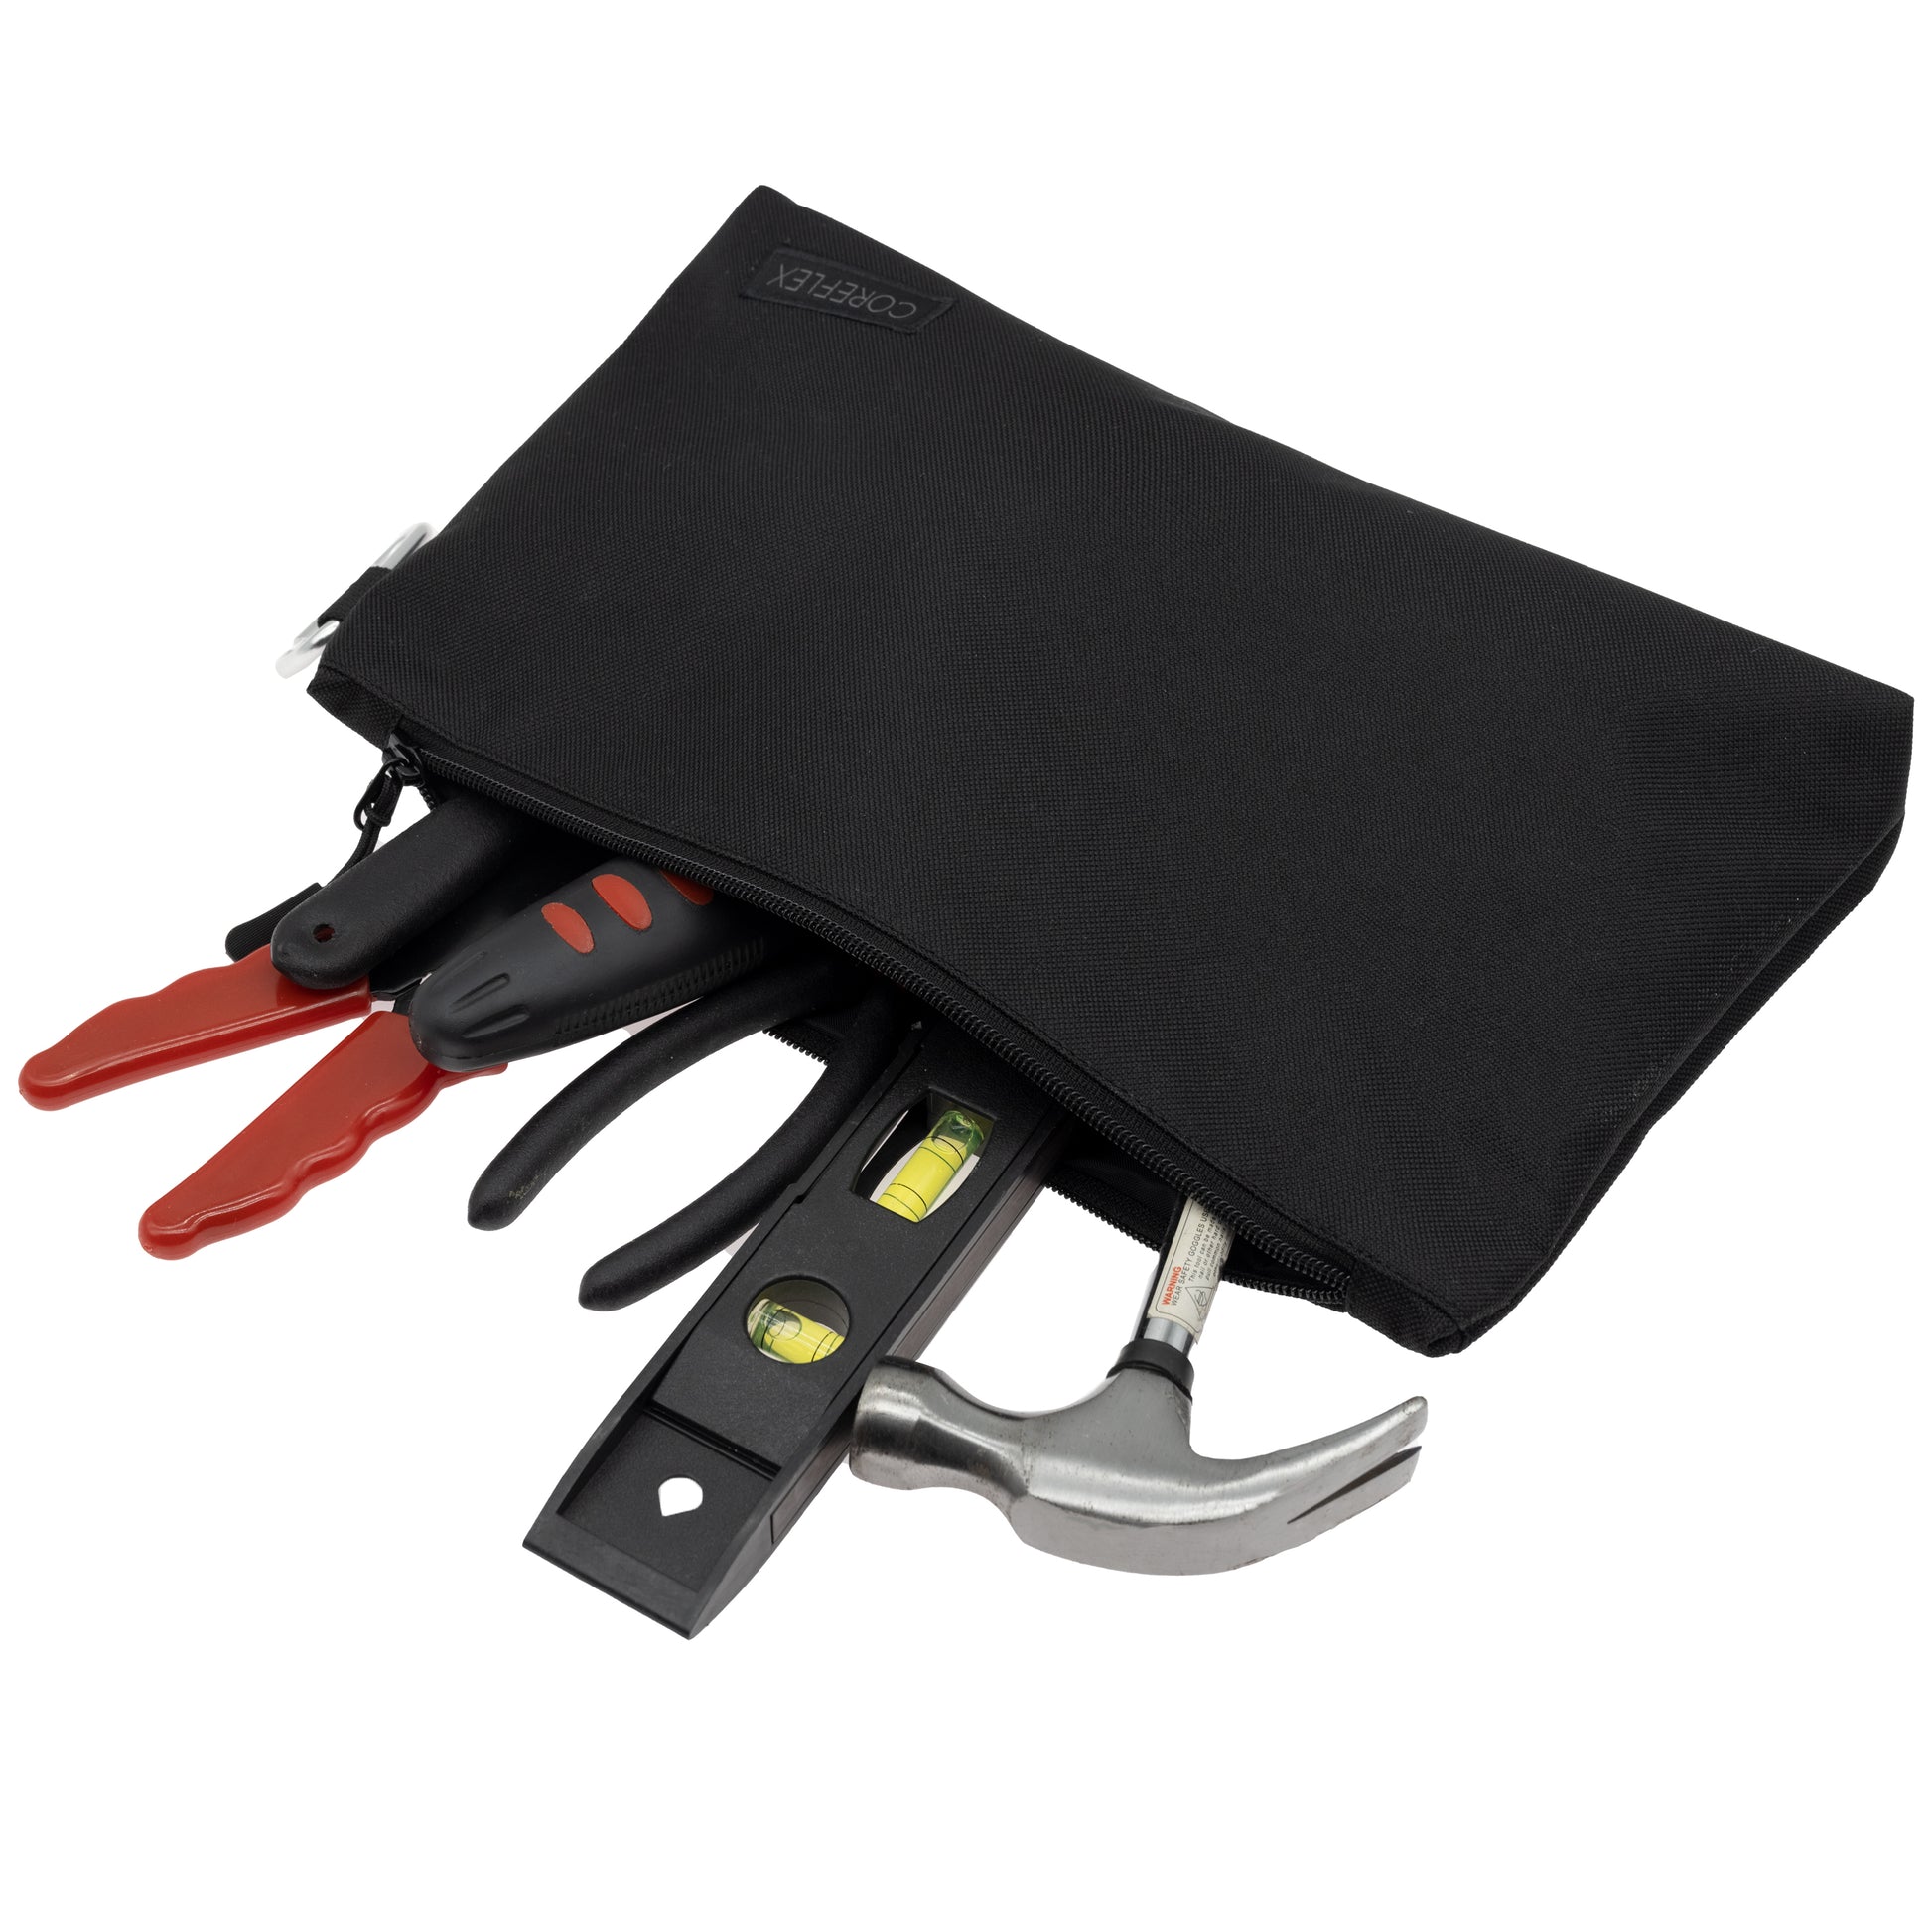 Coreflex 3pack premium Tool Pouch Zipper Bag, Multipurpose Storage pouch